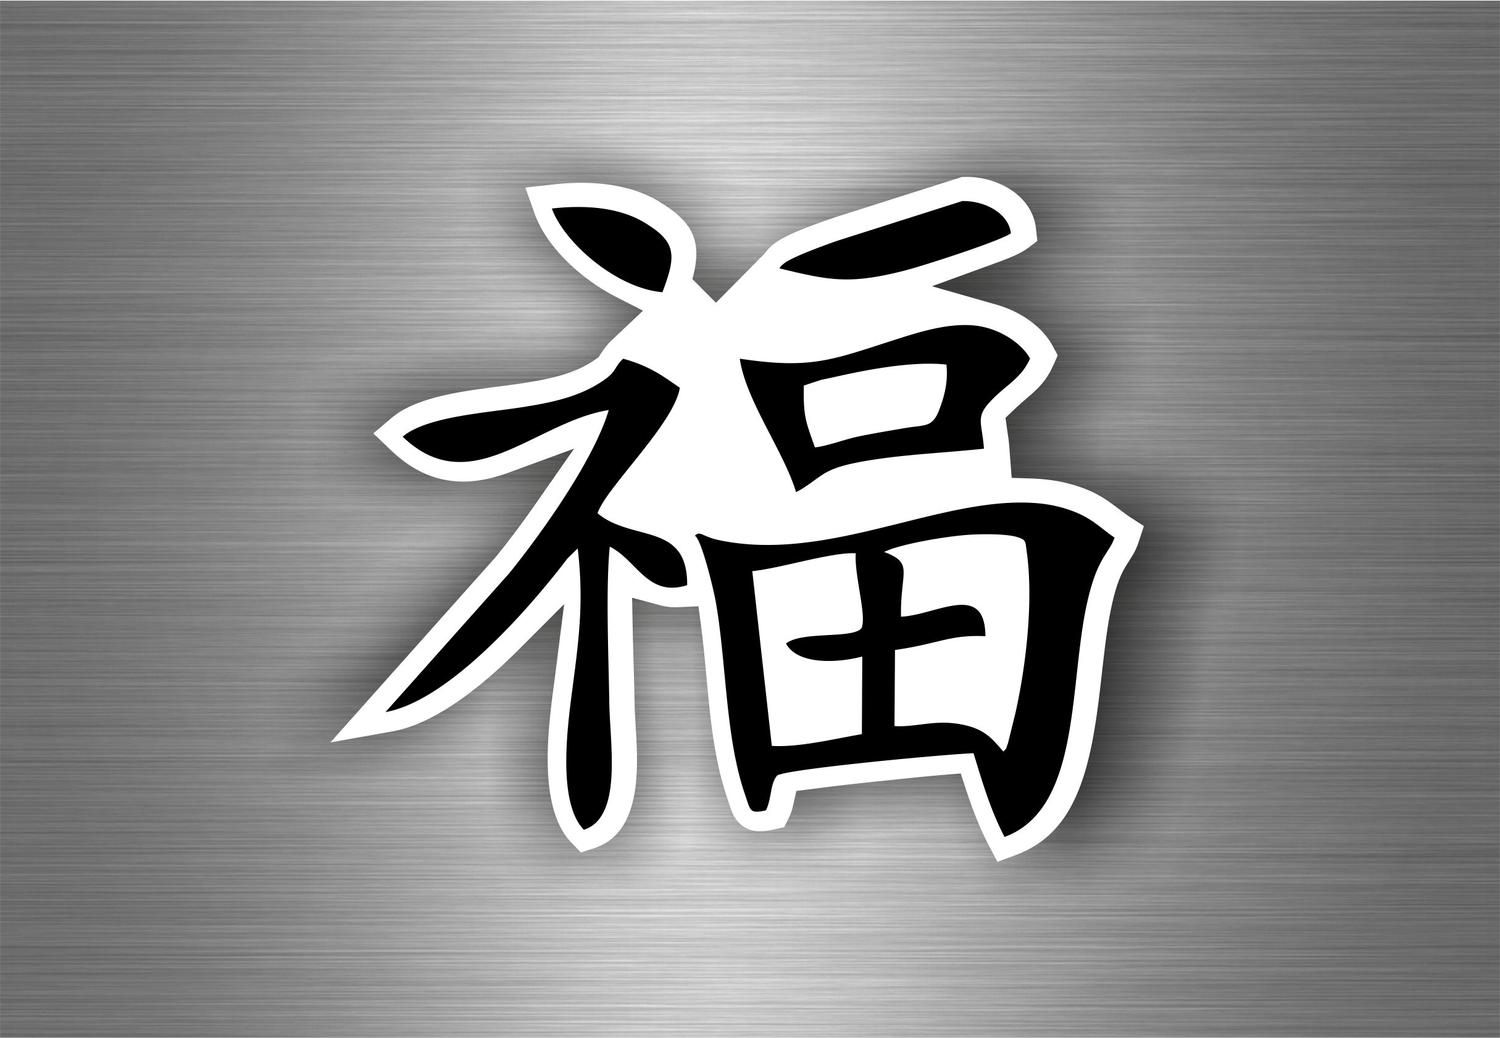 Autocollant sticker voiture moto macbook signe chinois lettre aimer love r1 